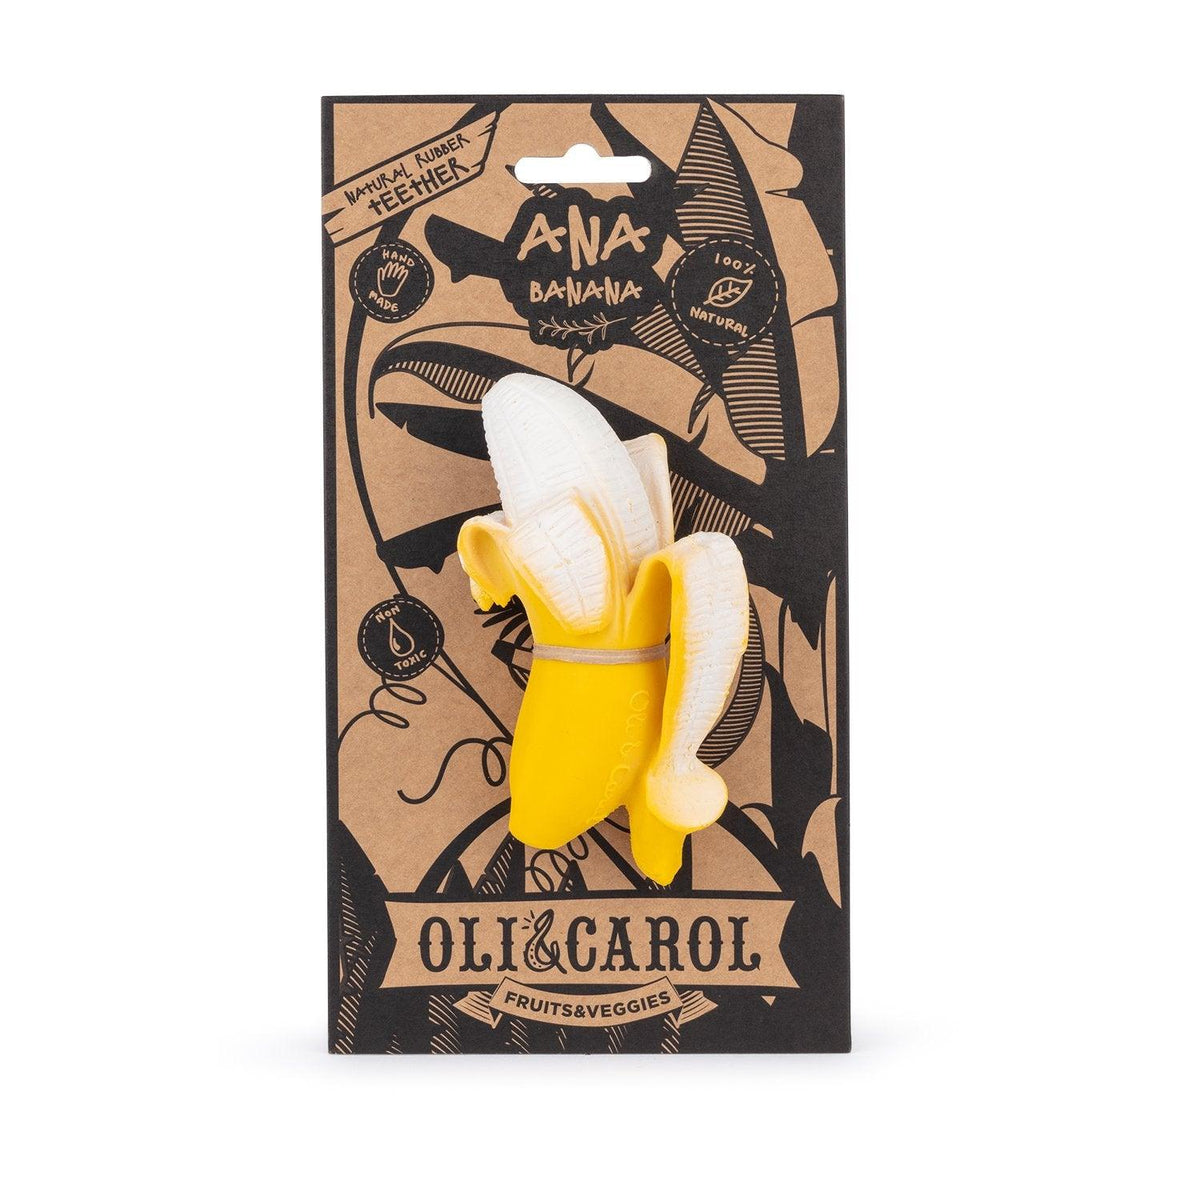 Oli & Carol | Jouet de caoutchouc 100% naturel | Fruits & Veggies | Ana Banana - Oli & Carol